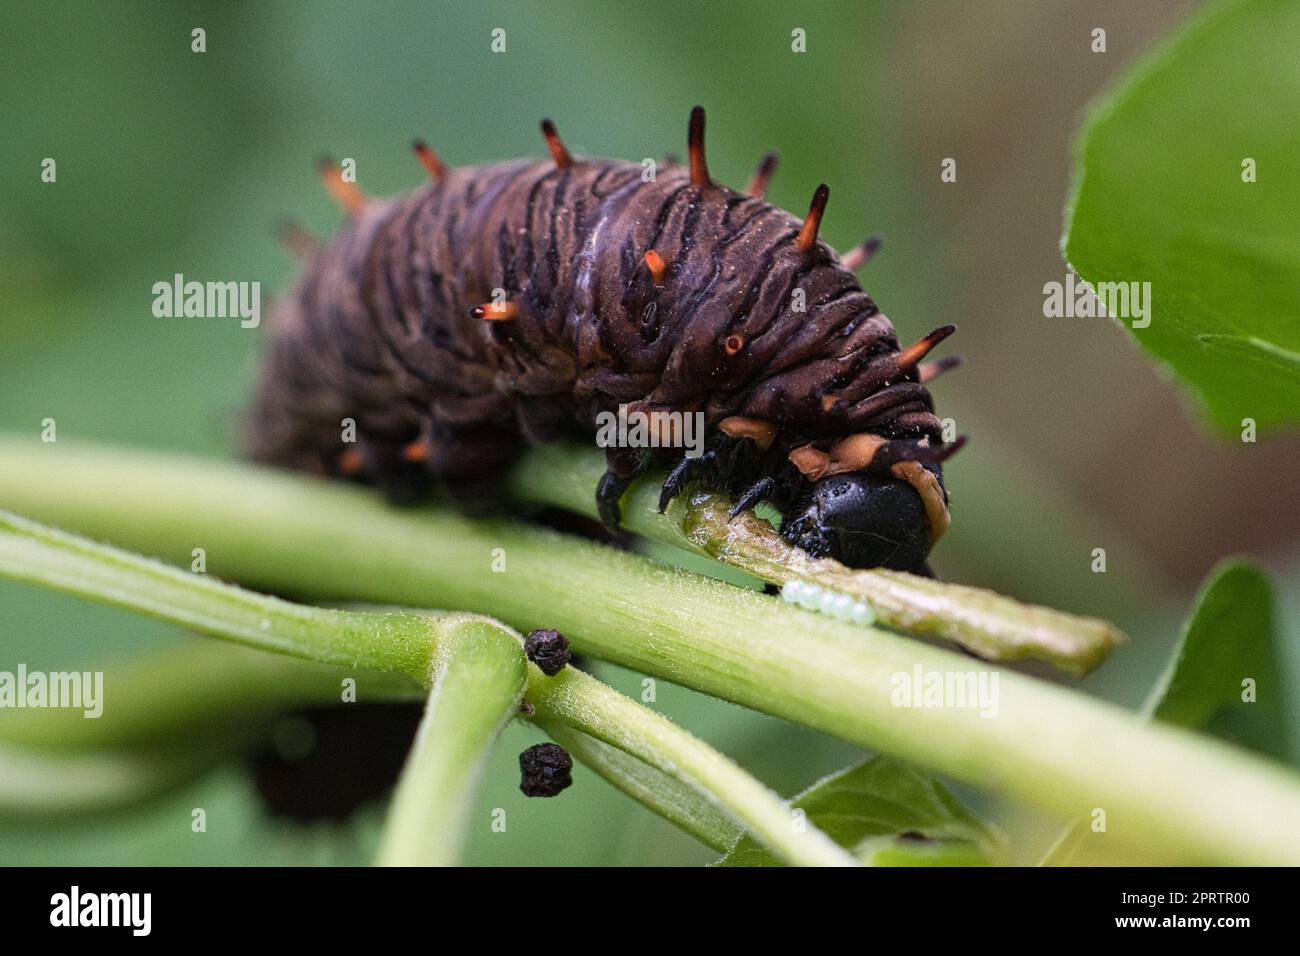 Caterpillar feeding on a leaf. a single animal close up Stock Photo